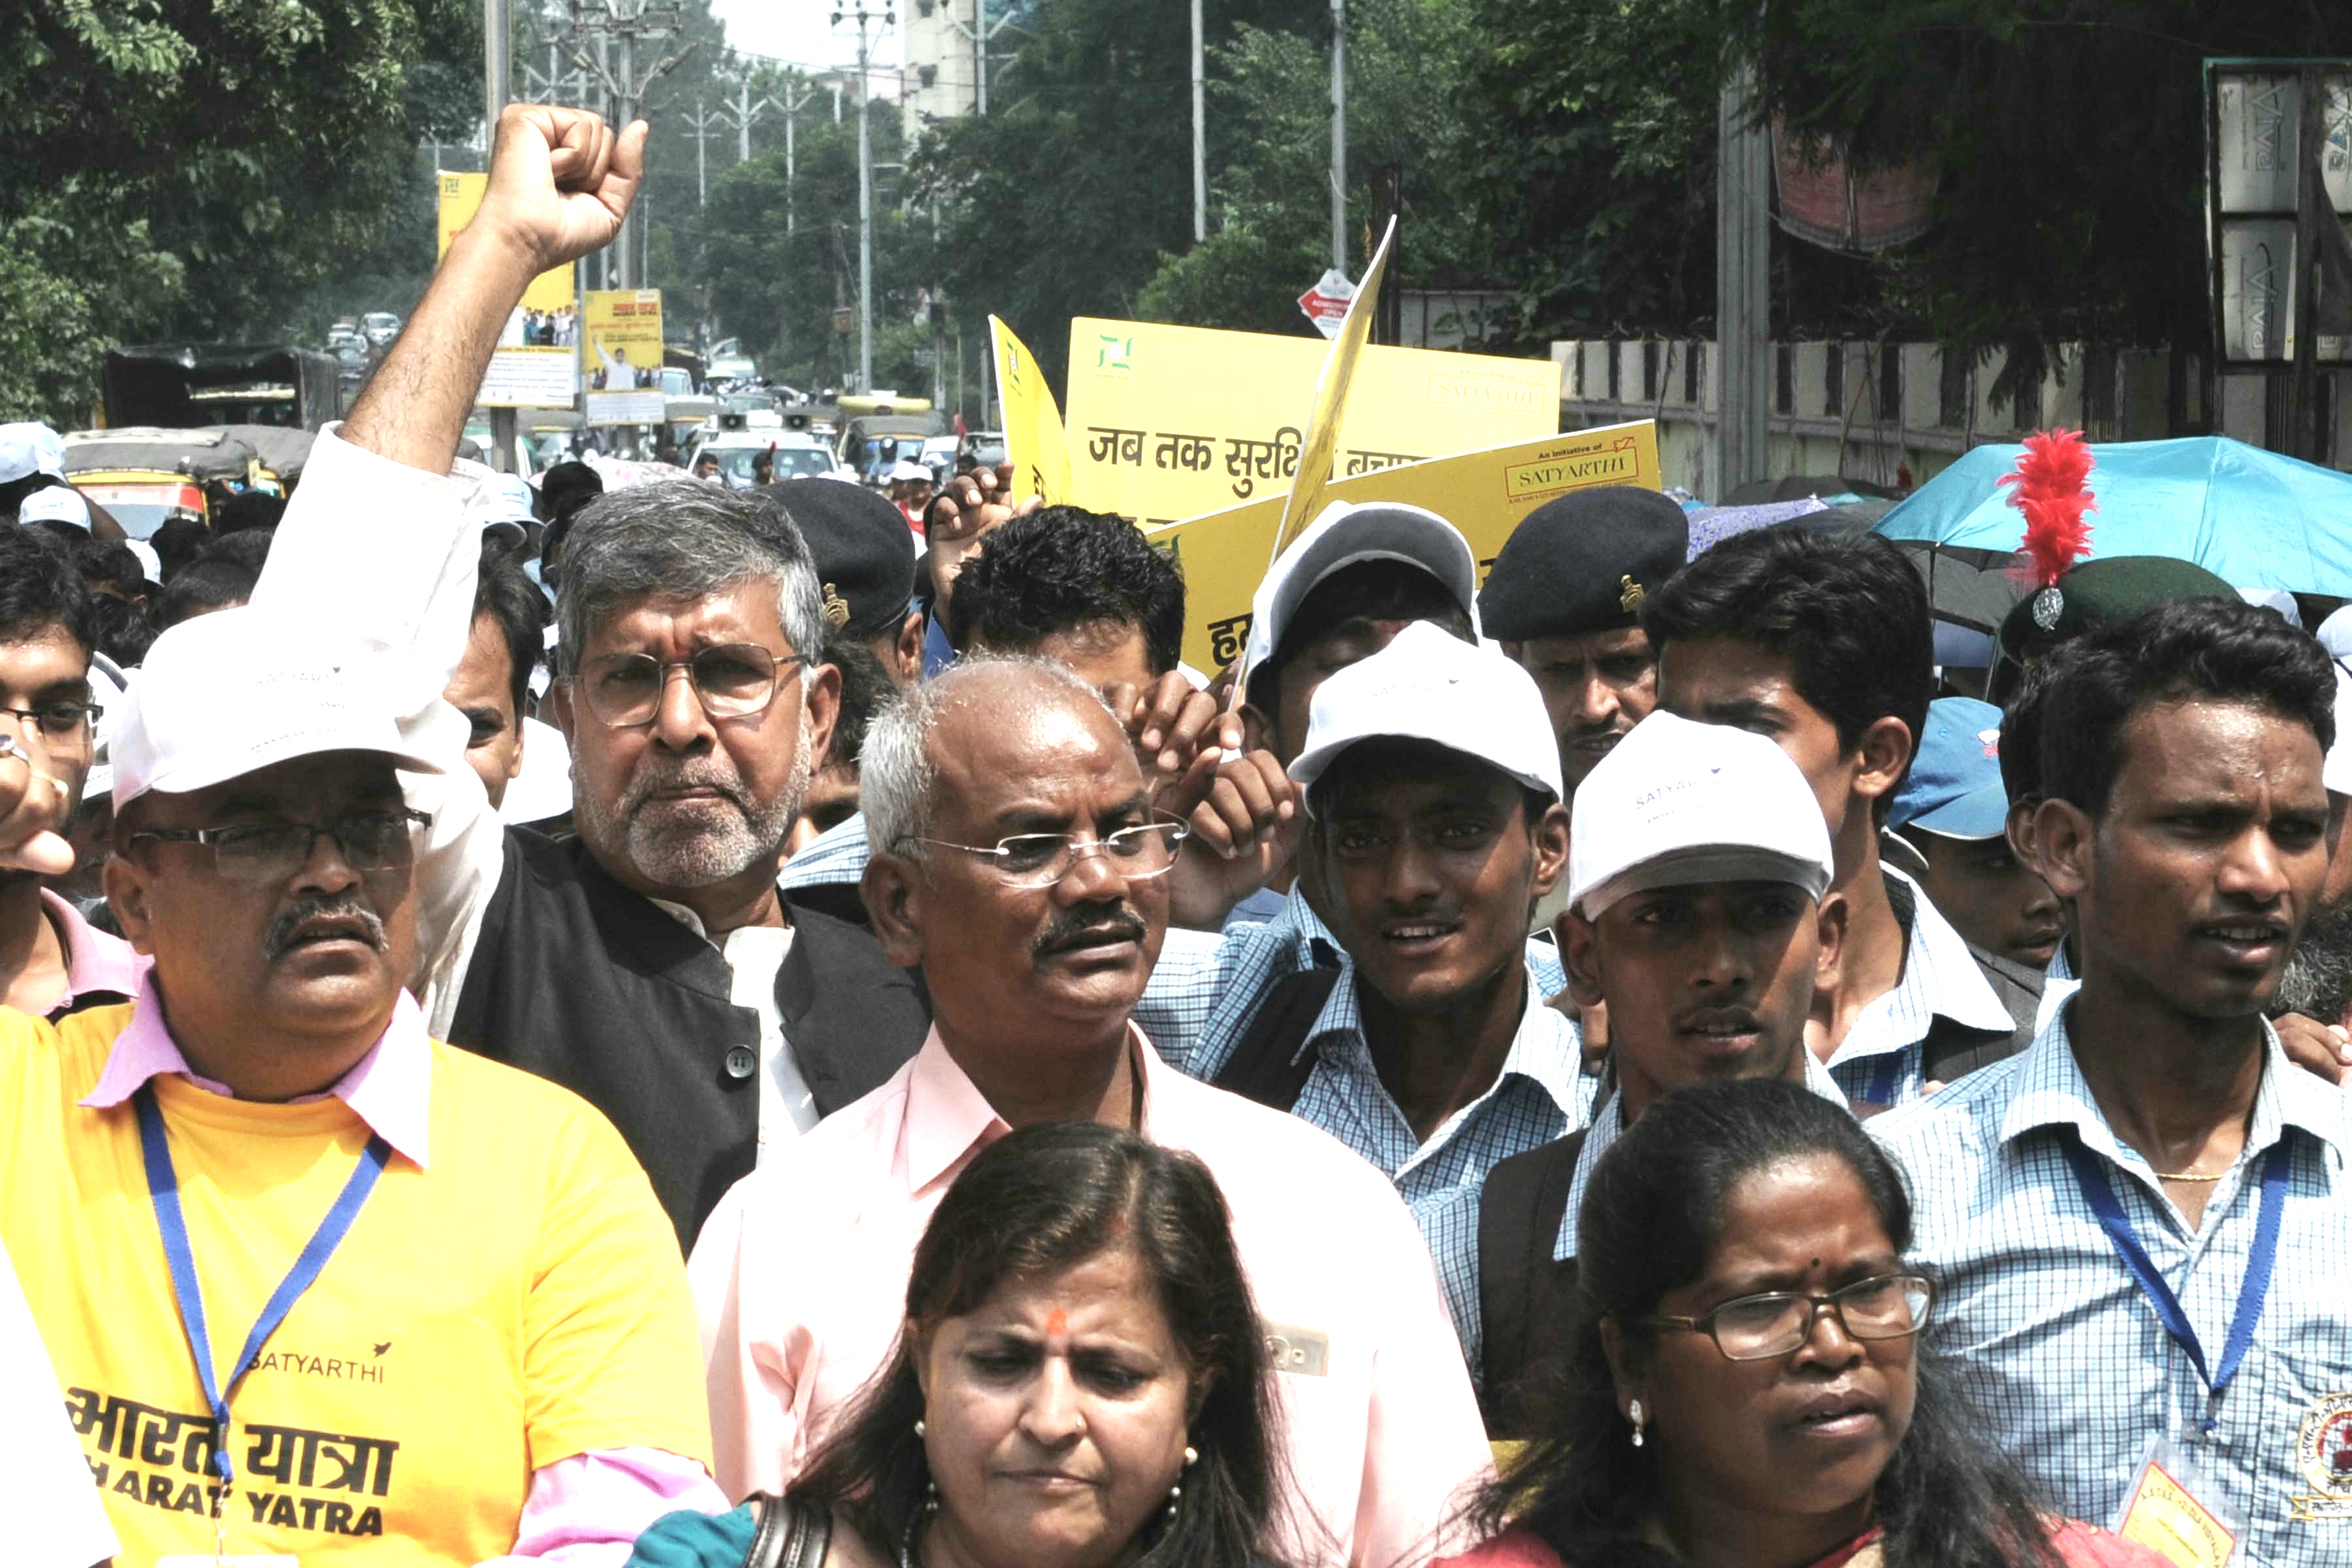 Bharat Yatra rally by Nobel Peace laureate Kailash Satyarthi in Ranchi